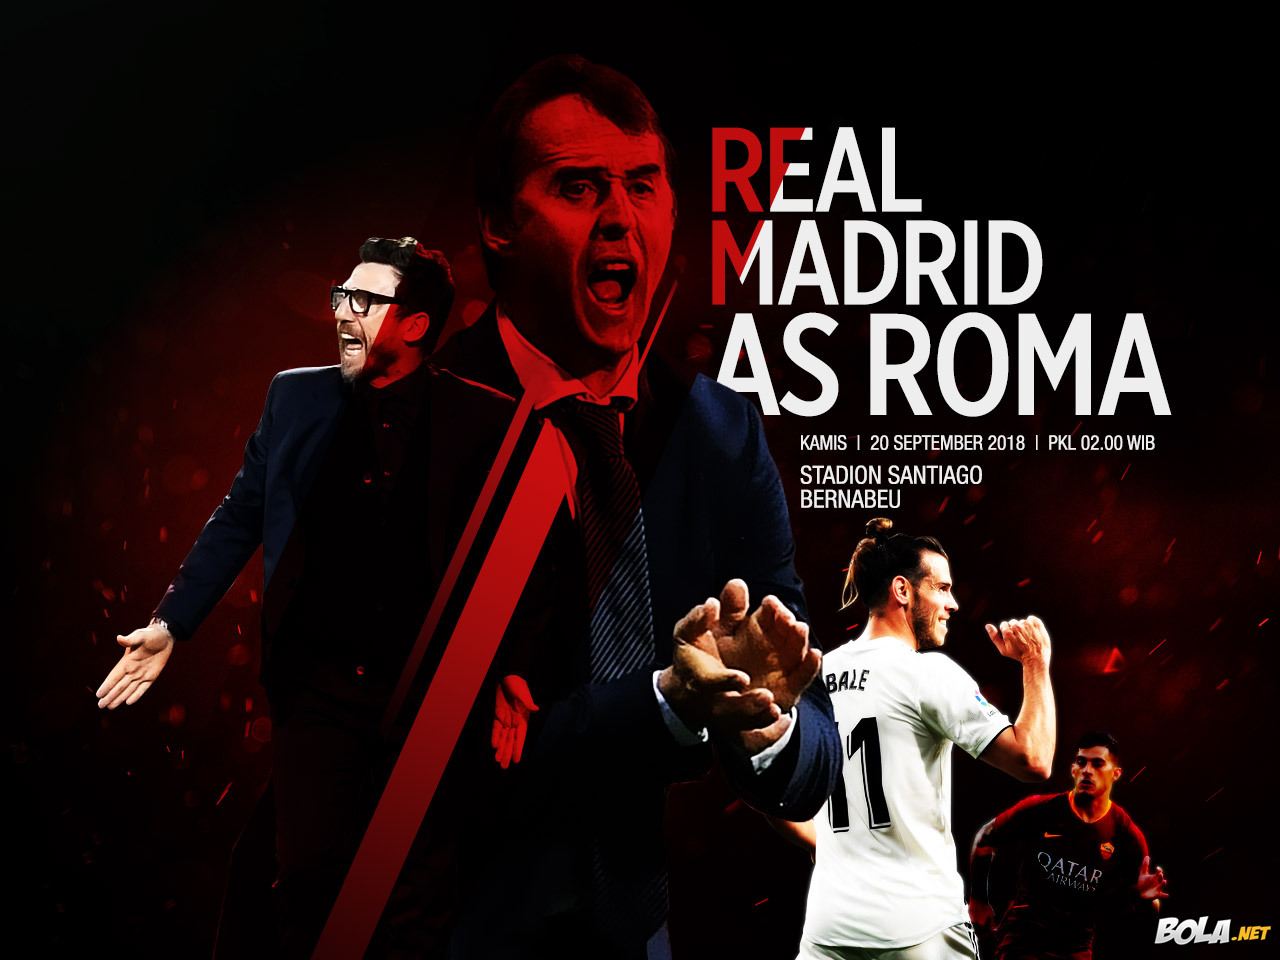 Deskripsi : Wallpaper Real Madrid Vs As Roma, size: 1280x960